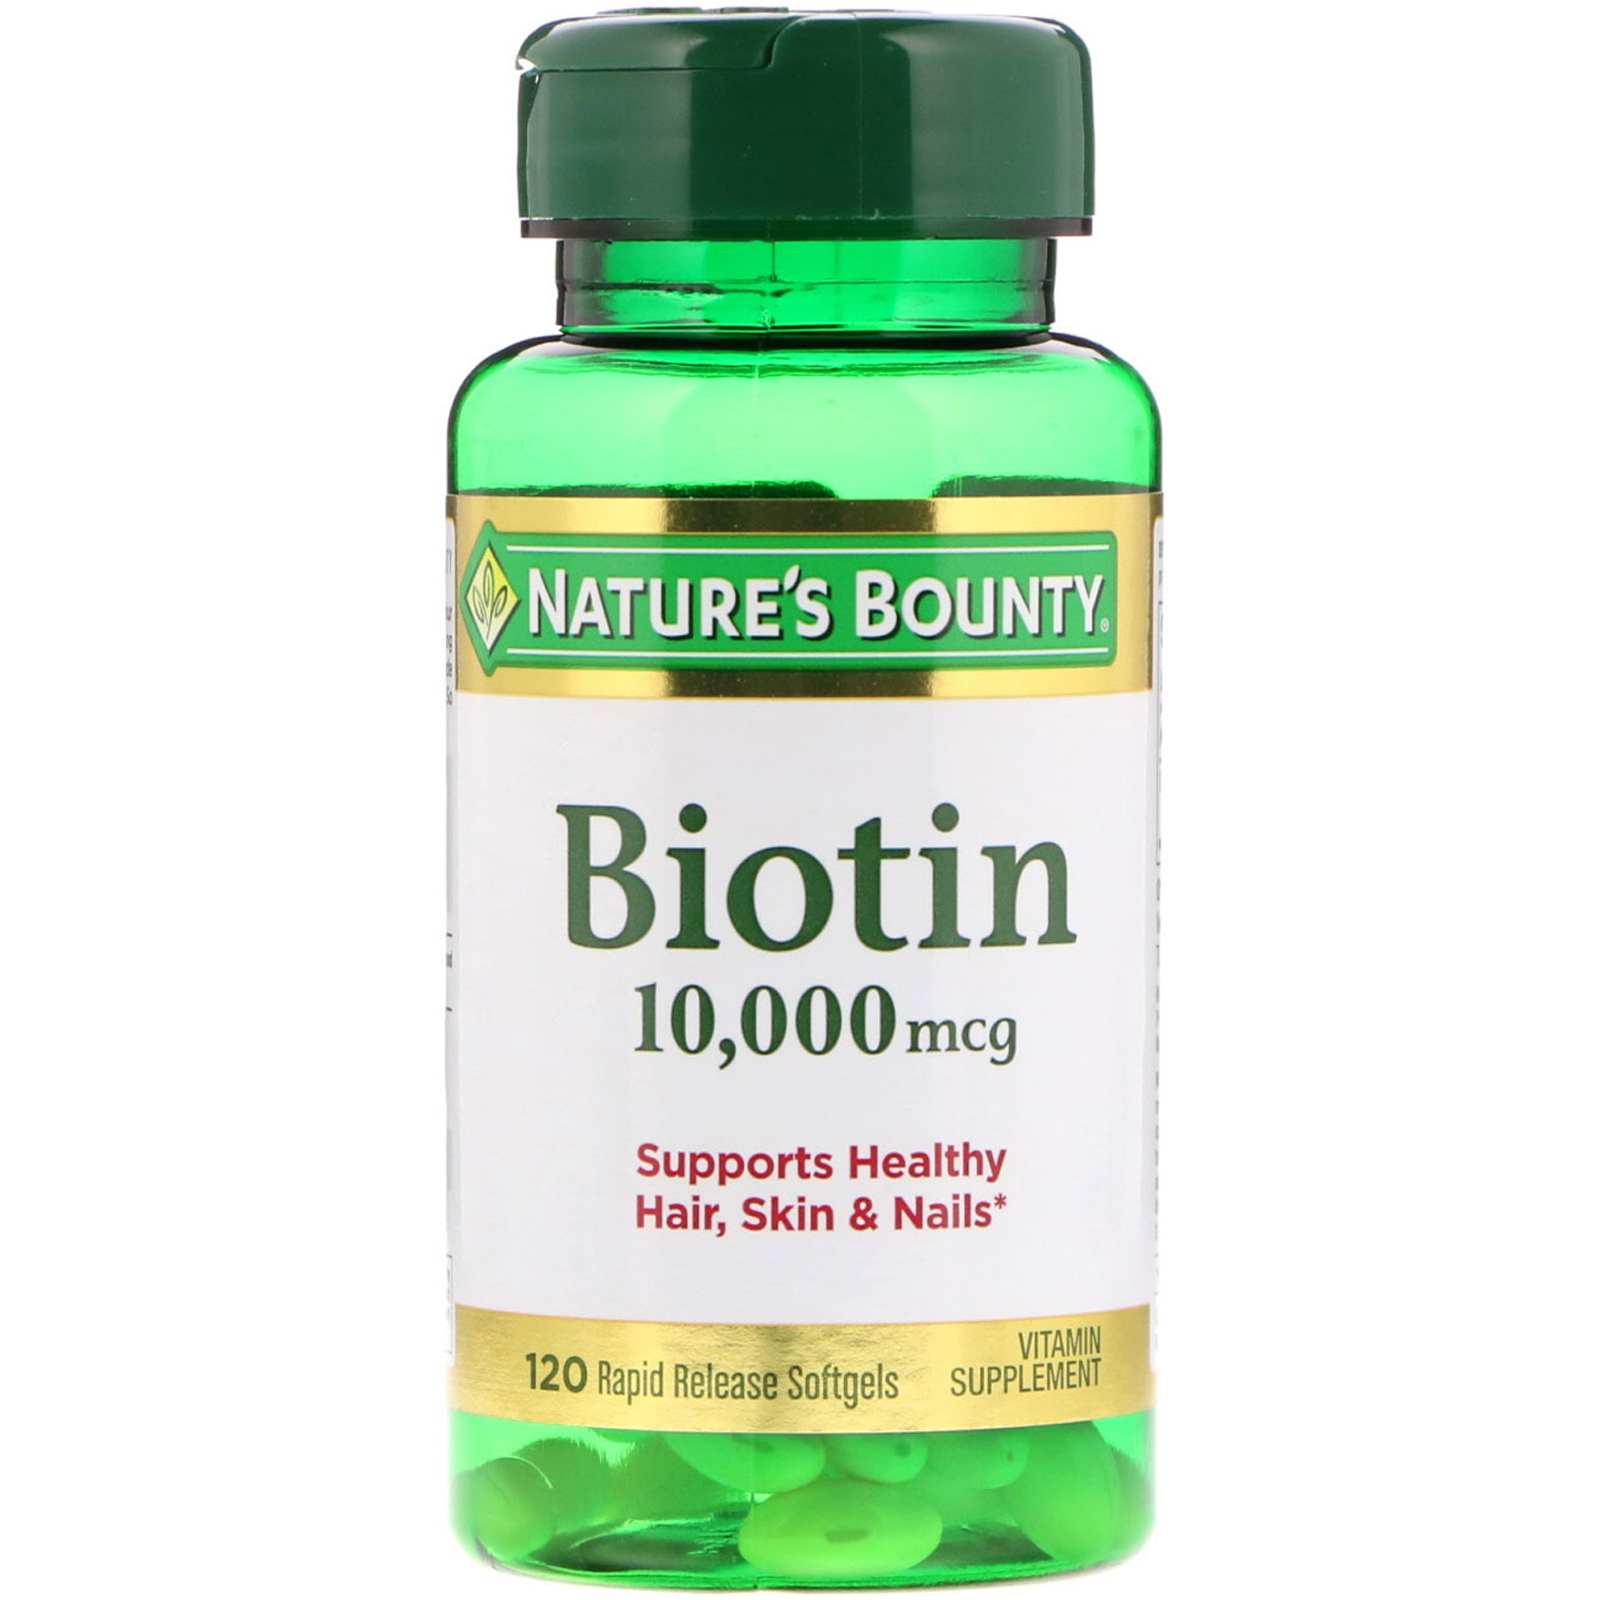 nature-s-bounty-biotine-10-000-mcg-120-g-lules-souples-lib-ration